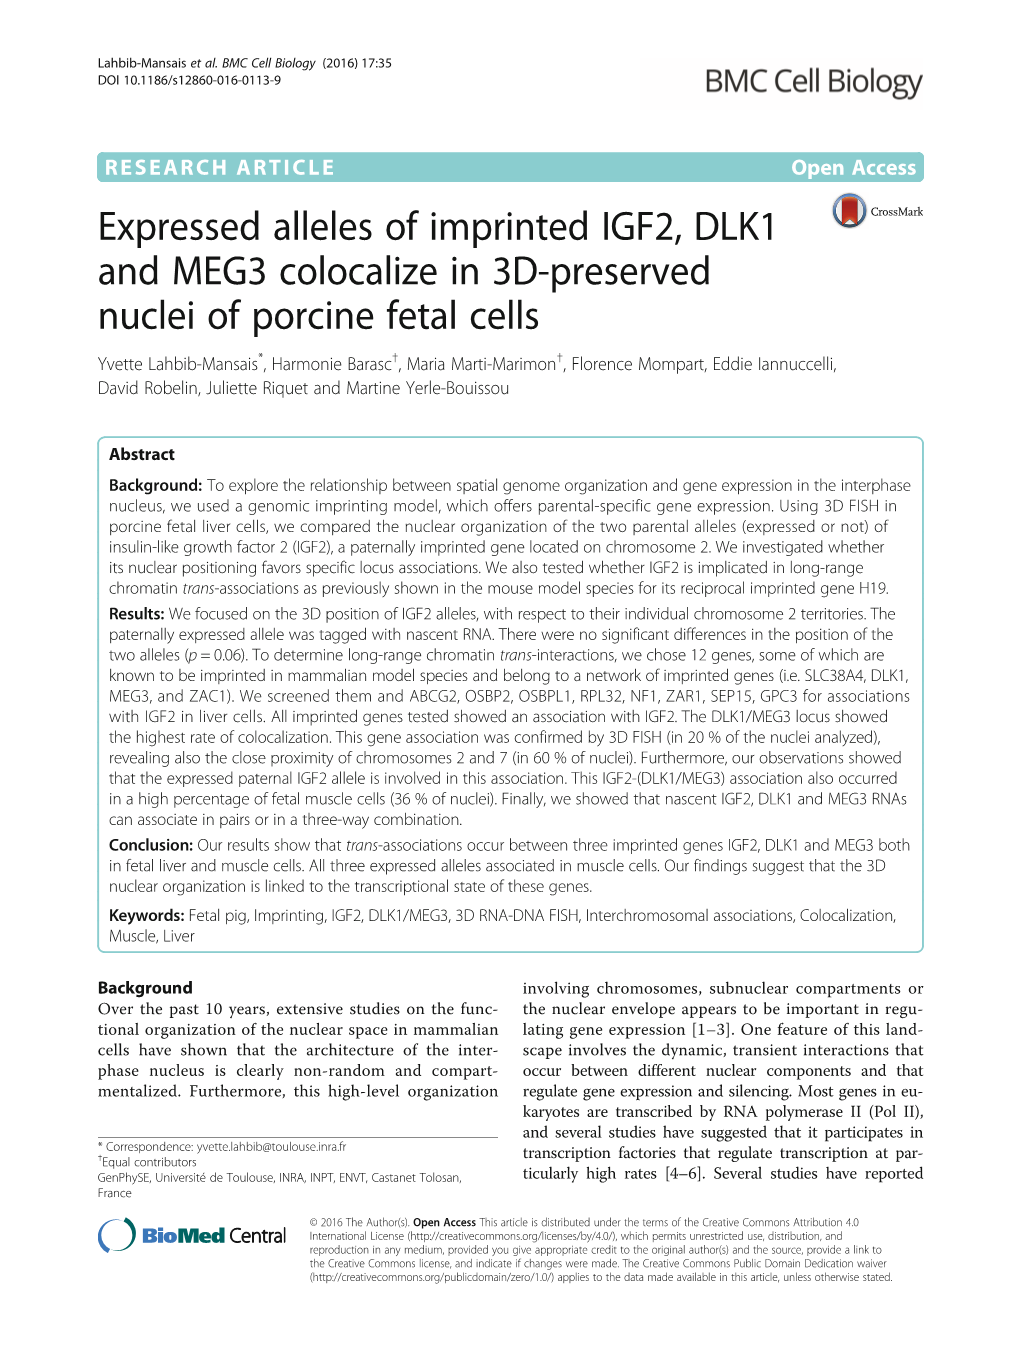 Expressed Alleles of Imprinted IGF2, DLK1 and MEG3 Colocalize in 3D-Preserved Nuclei of Porcine Fetal Cells